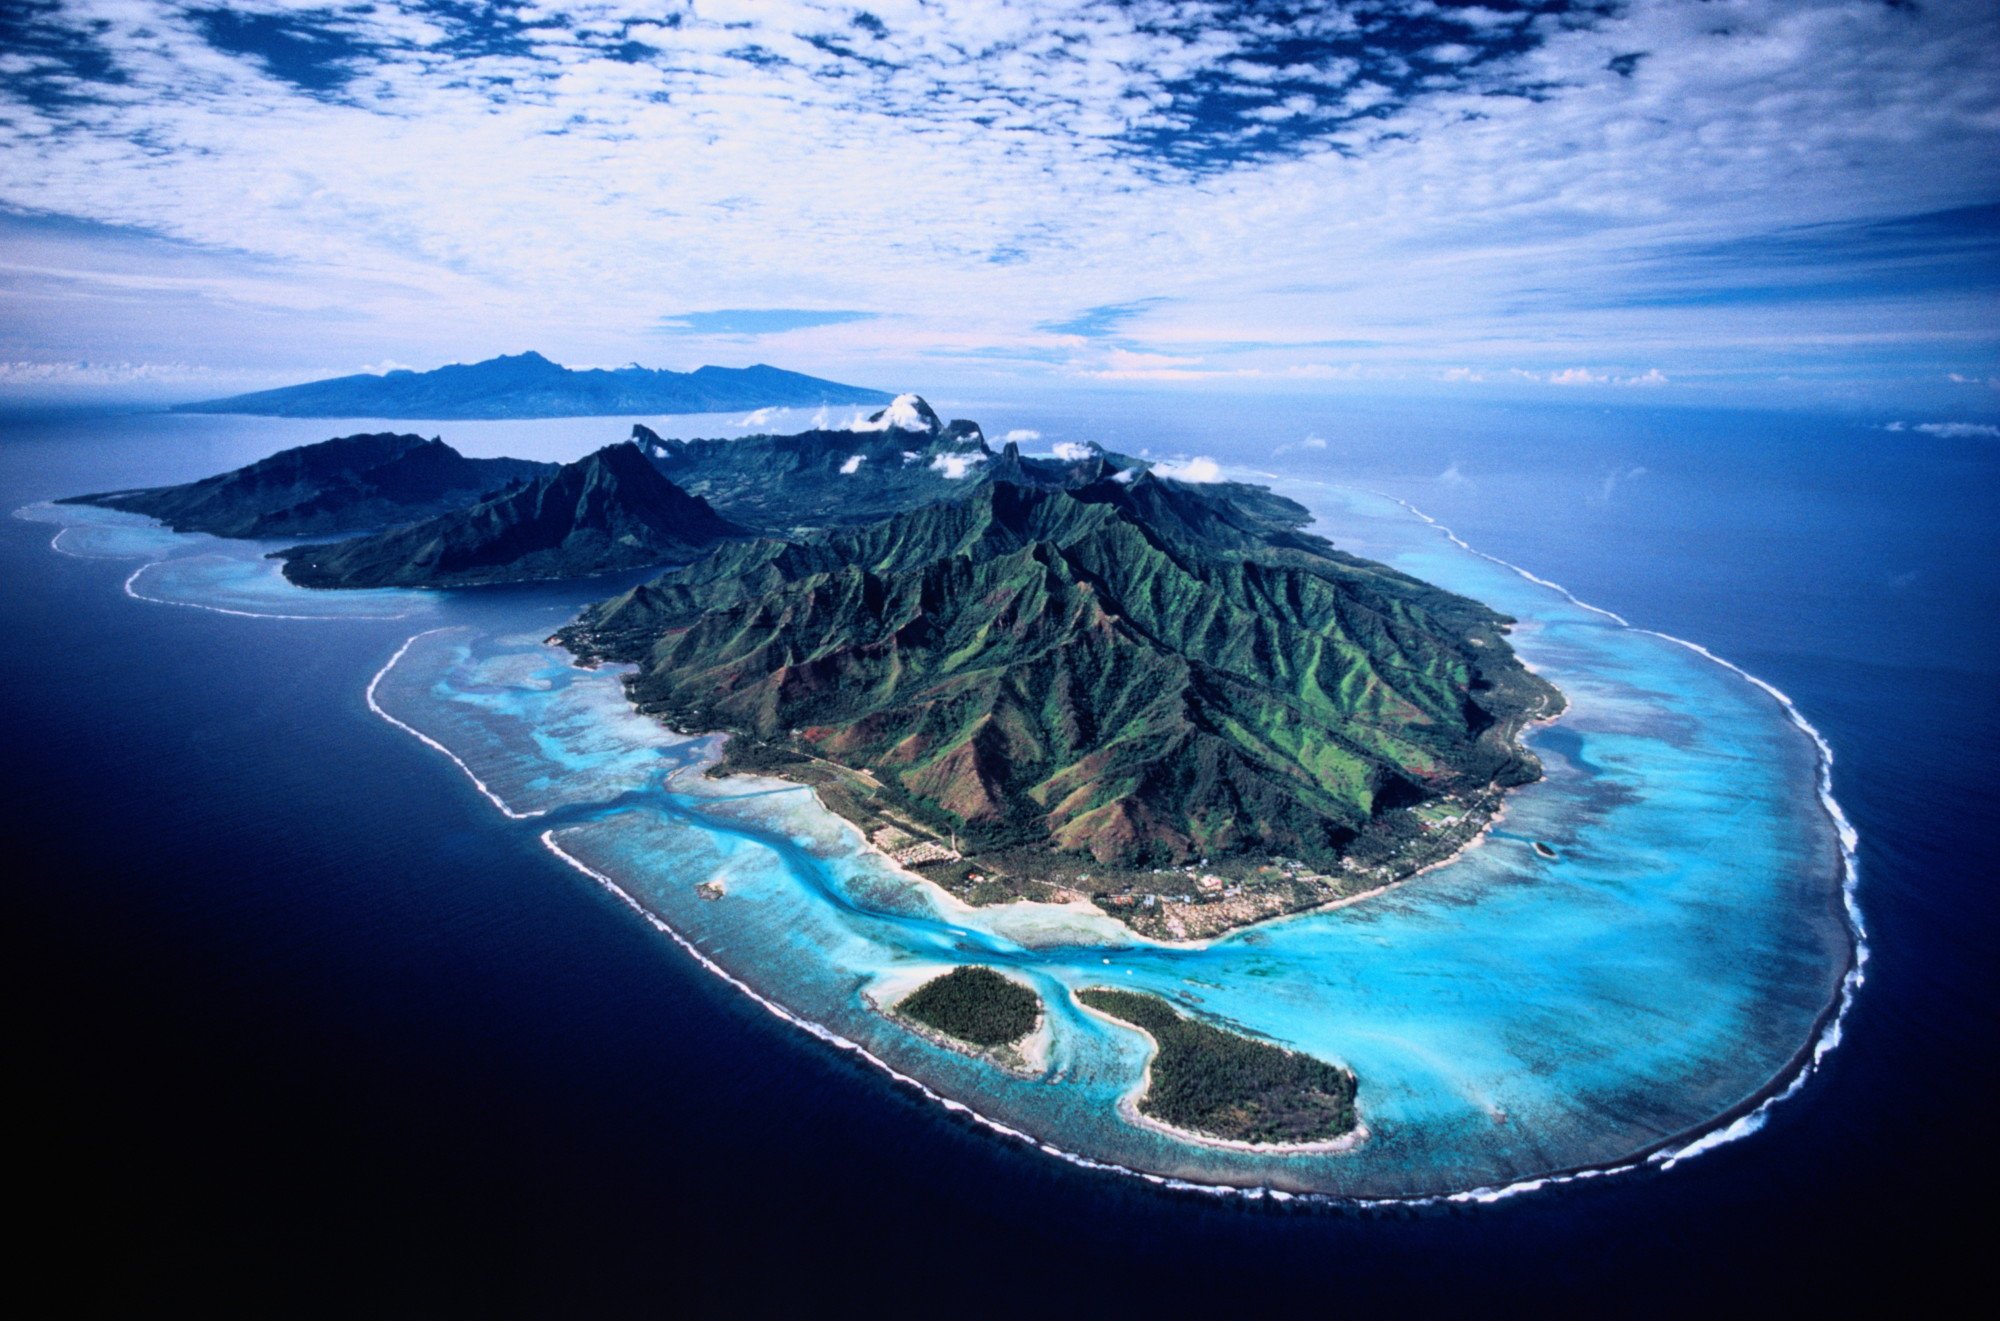 The island was beautiful. Муреа французская Полинезия. Острова Полинезии и Таити. Муреа Таити. Таити остров архипелаг.